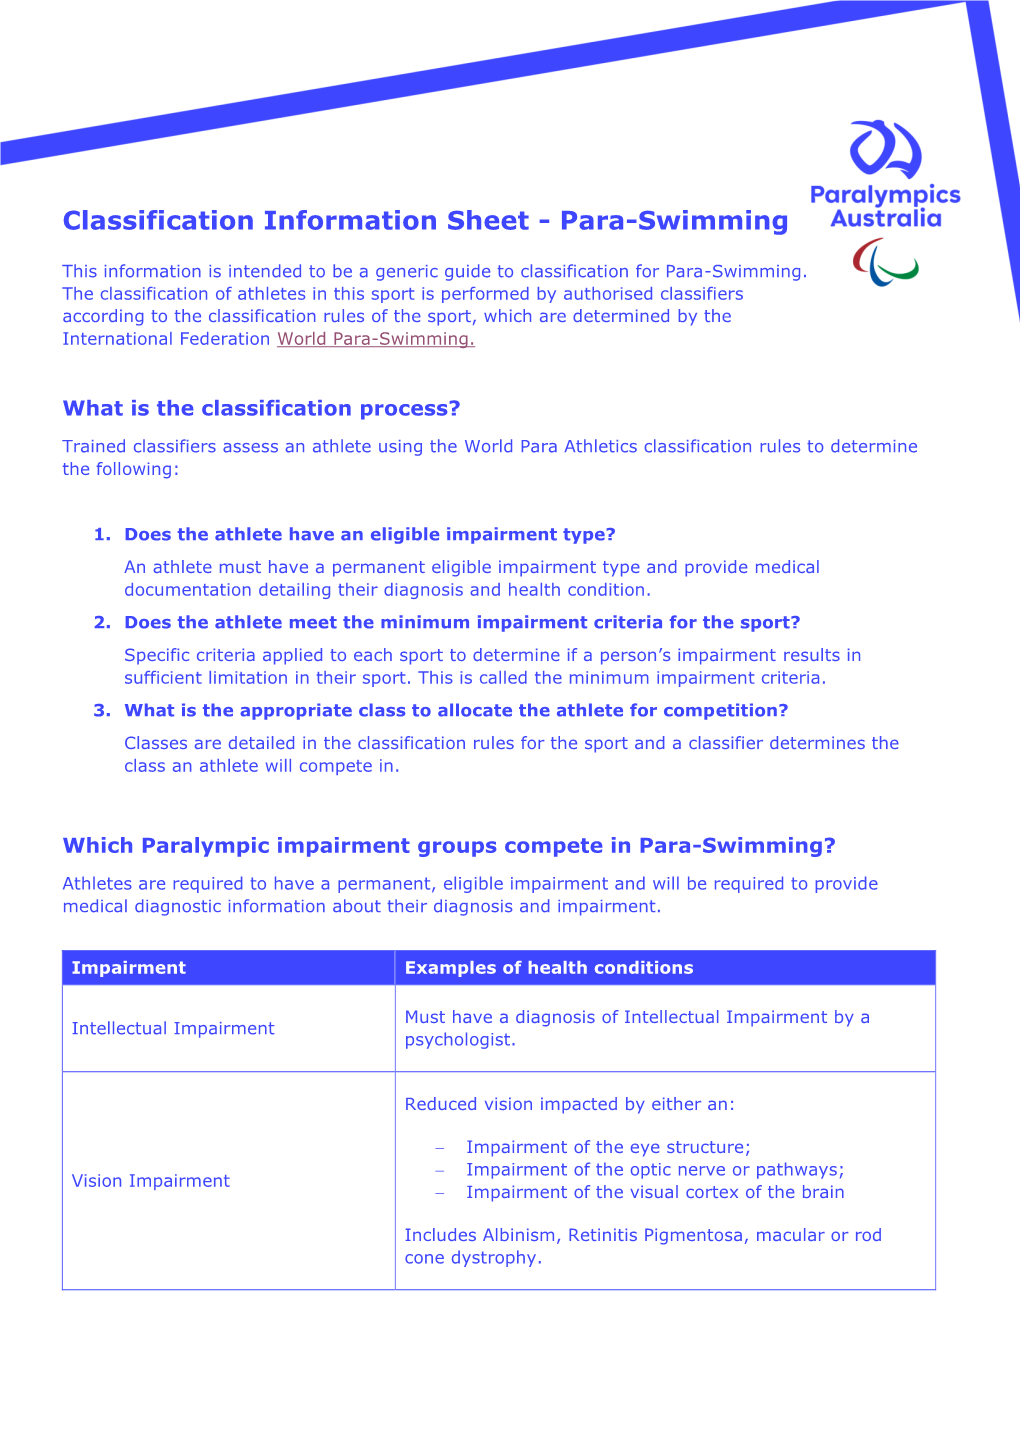 Para-Swimming Classification Information Sheet